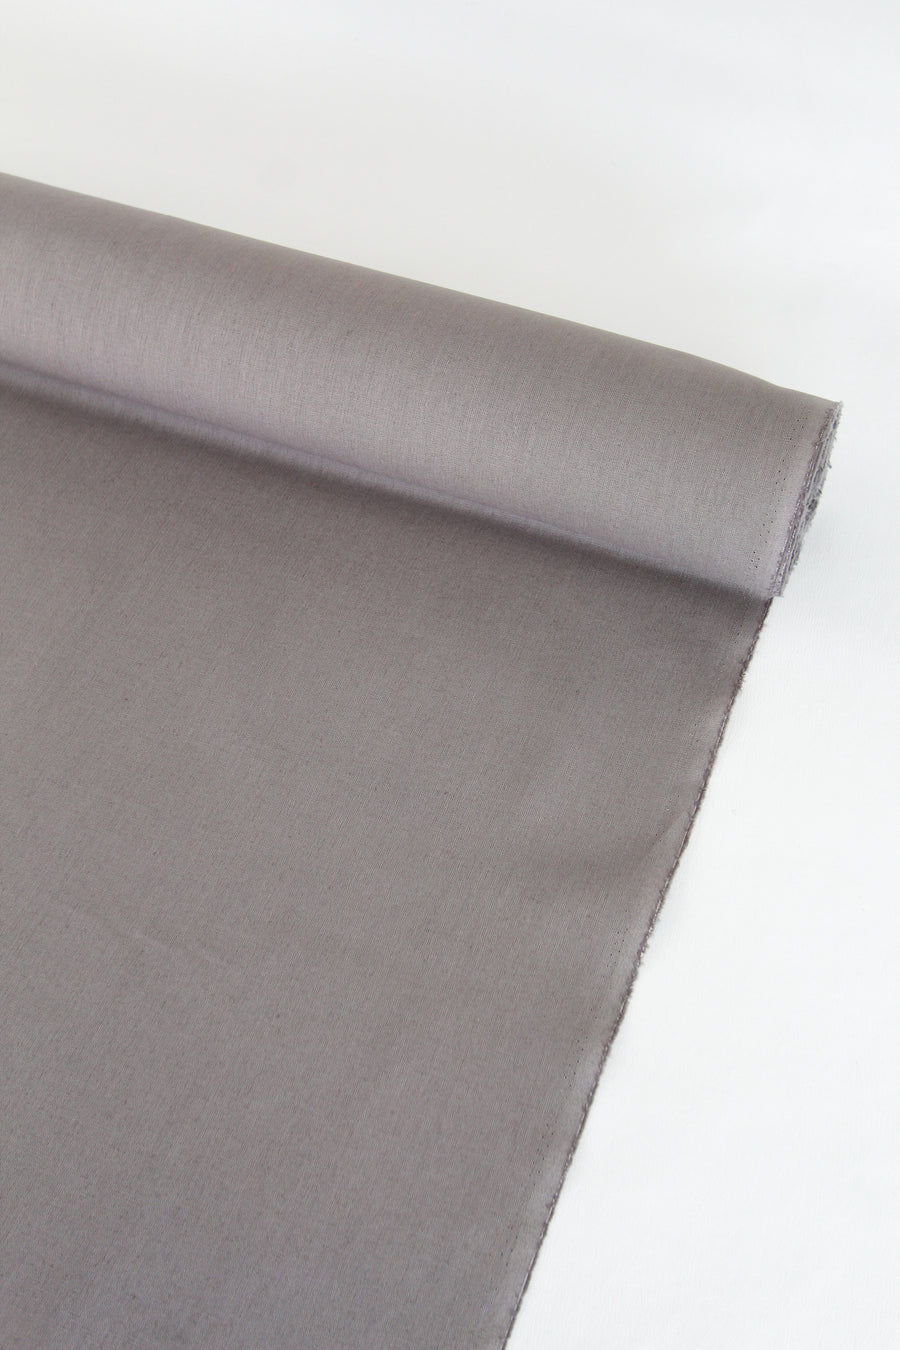 Mustang - Canvas Weave Linen | Fog (PRE-CUT)